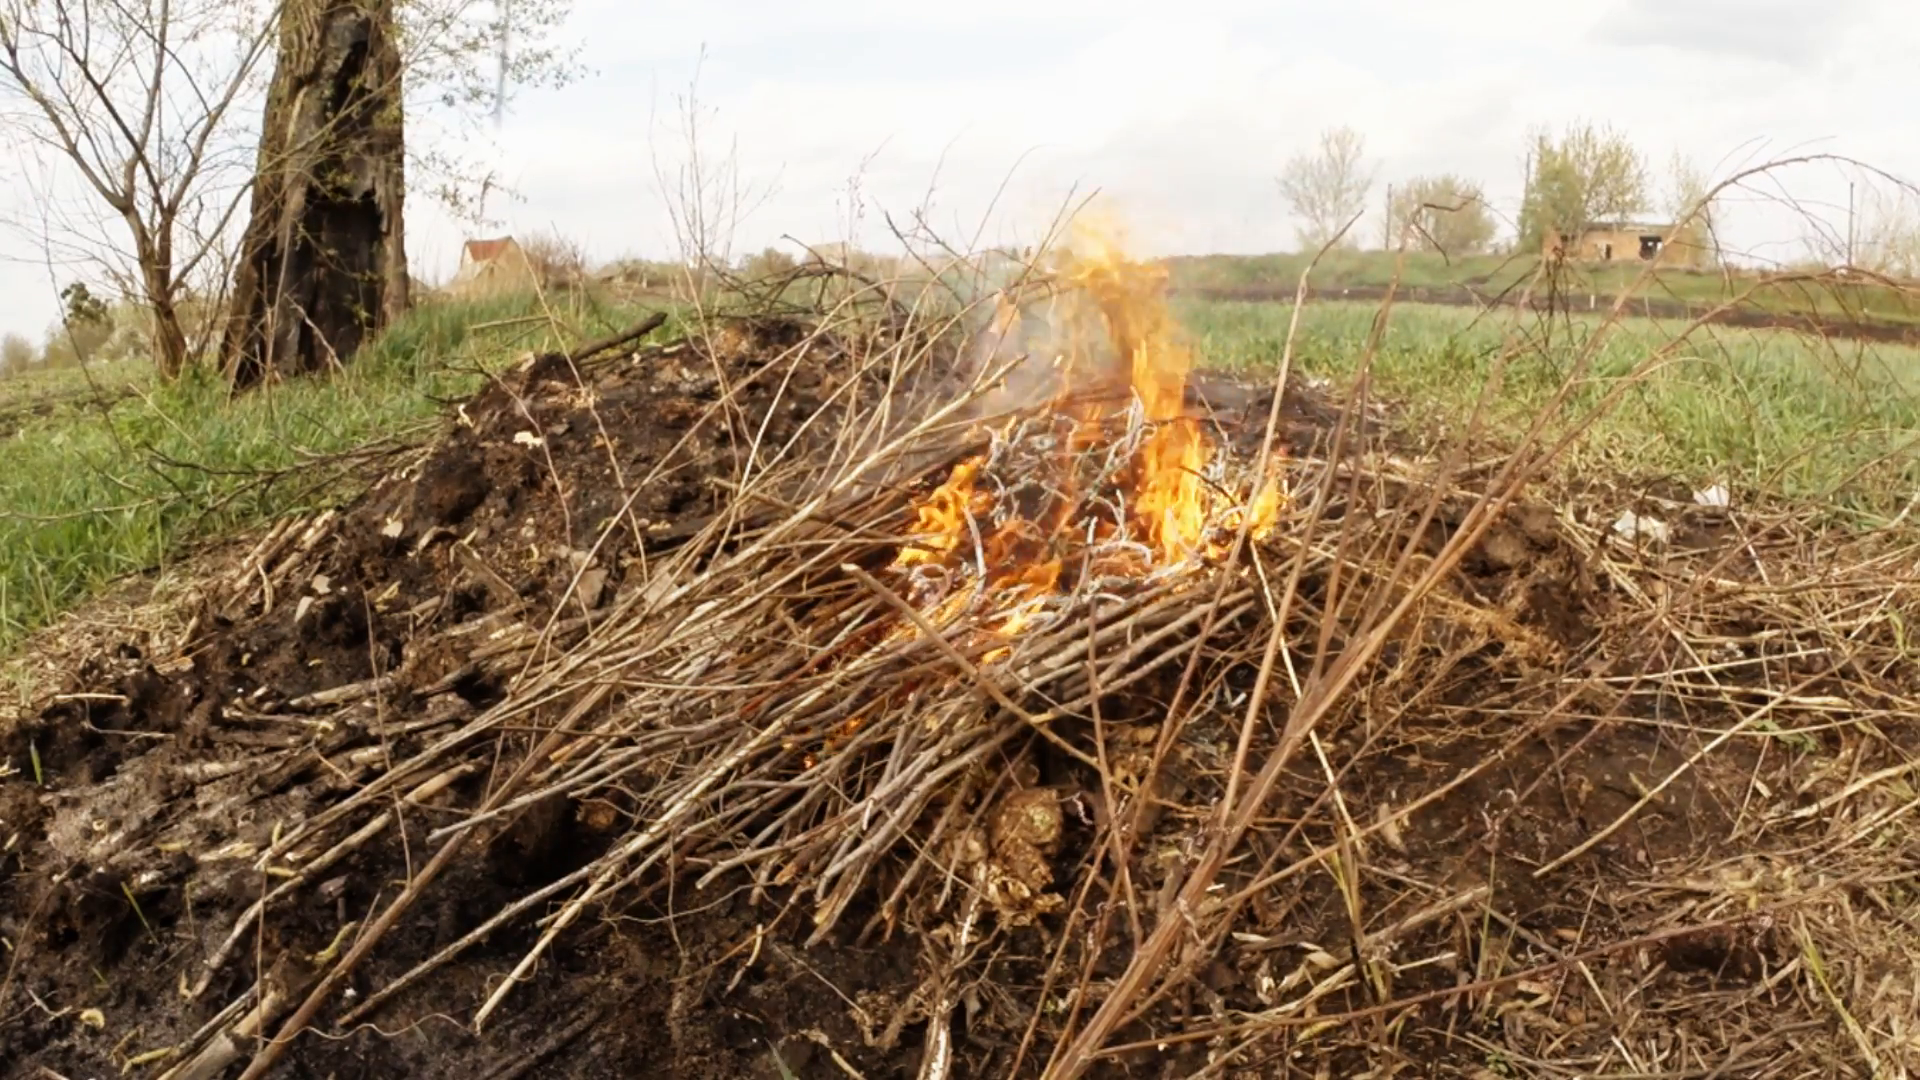 Lot of Burning Dry Sticks in Fire Fume in a Field Near a Tree Stock ...